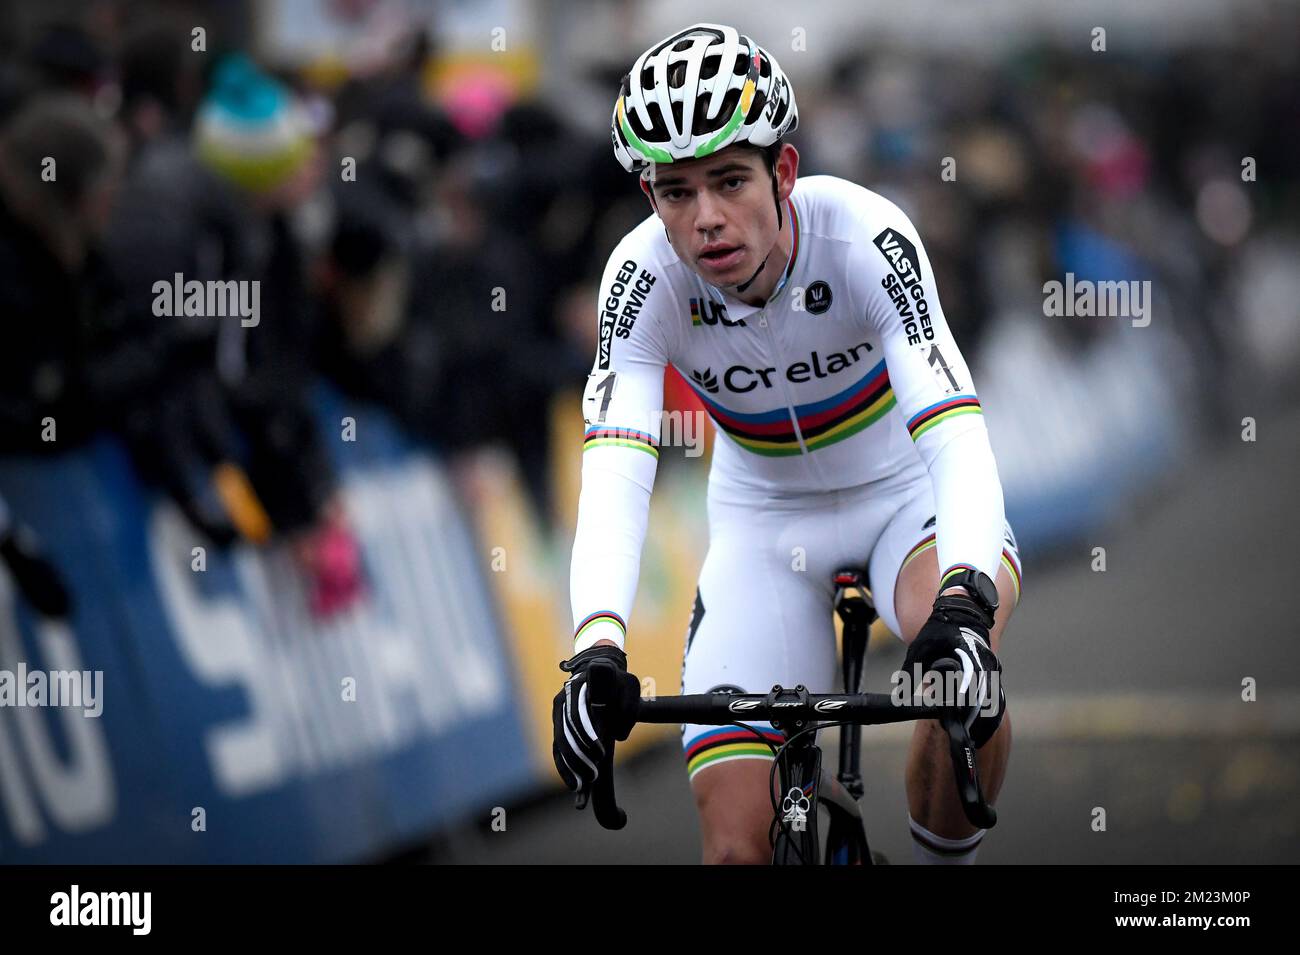 Der belgische Weltmeister Wout Van Aert überquert die Ziellinie beim Männer-Eliterennen der Cyclocross-Weltmeisterschaft in Zeven, Deutschland, dem fünften Rennen der UCI Cyclocross-Weltmeisterschaft am Samstag, den 26. November 2016. BELGA FOTO DAVID STOCKMAN Stockfoto